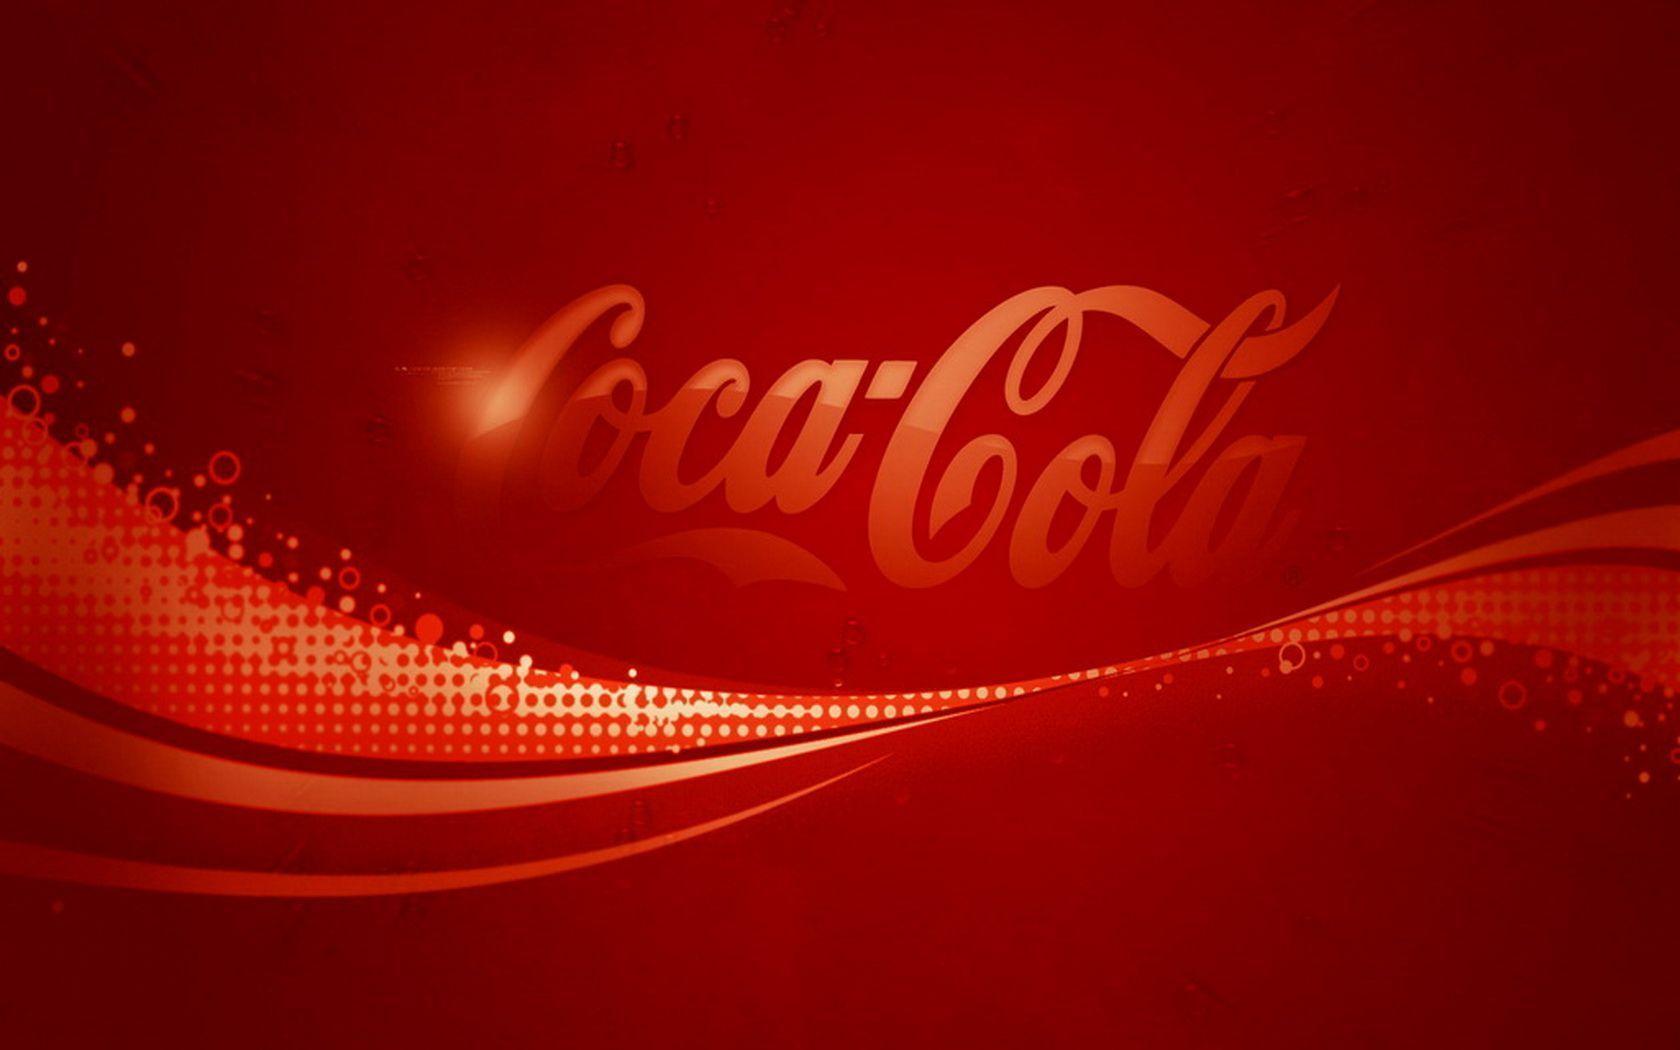 Coca Cola Wallpaper. Coca Cola Background